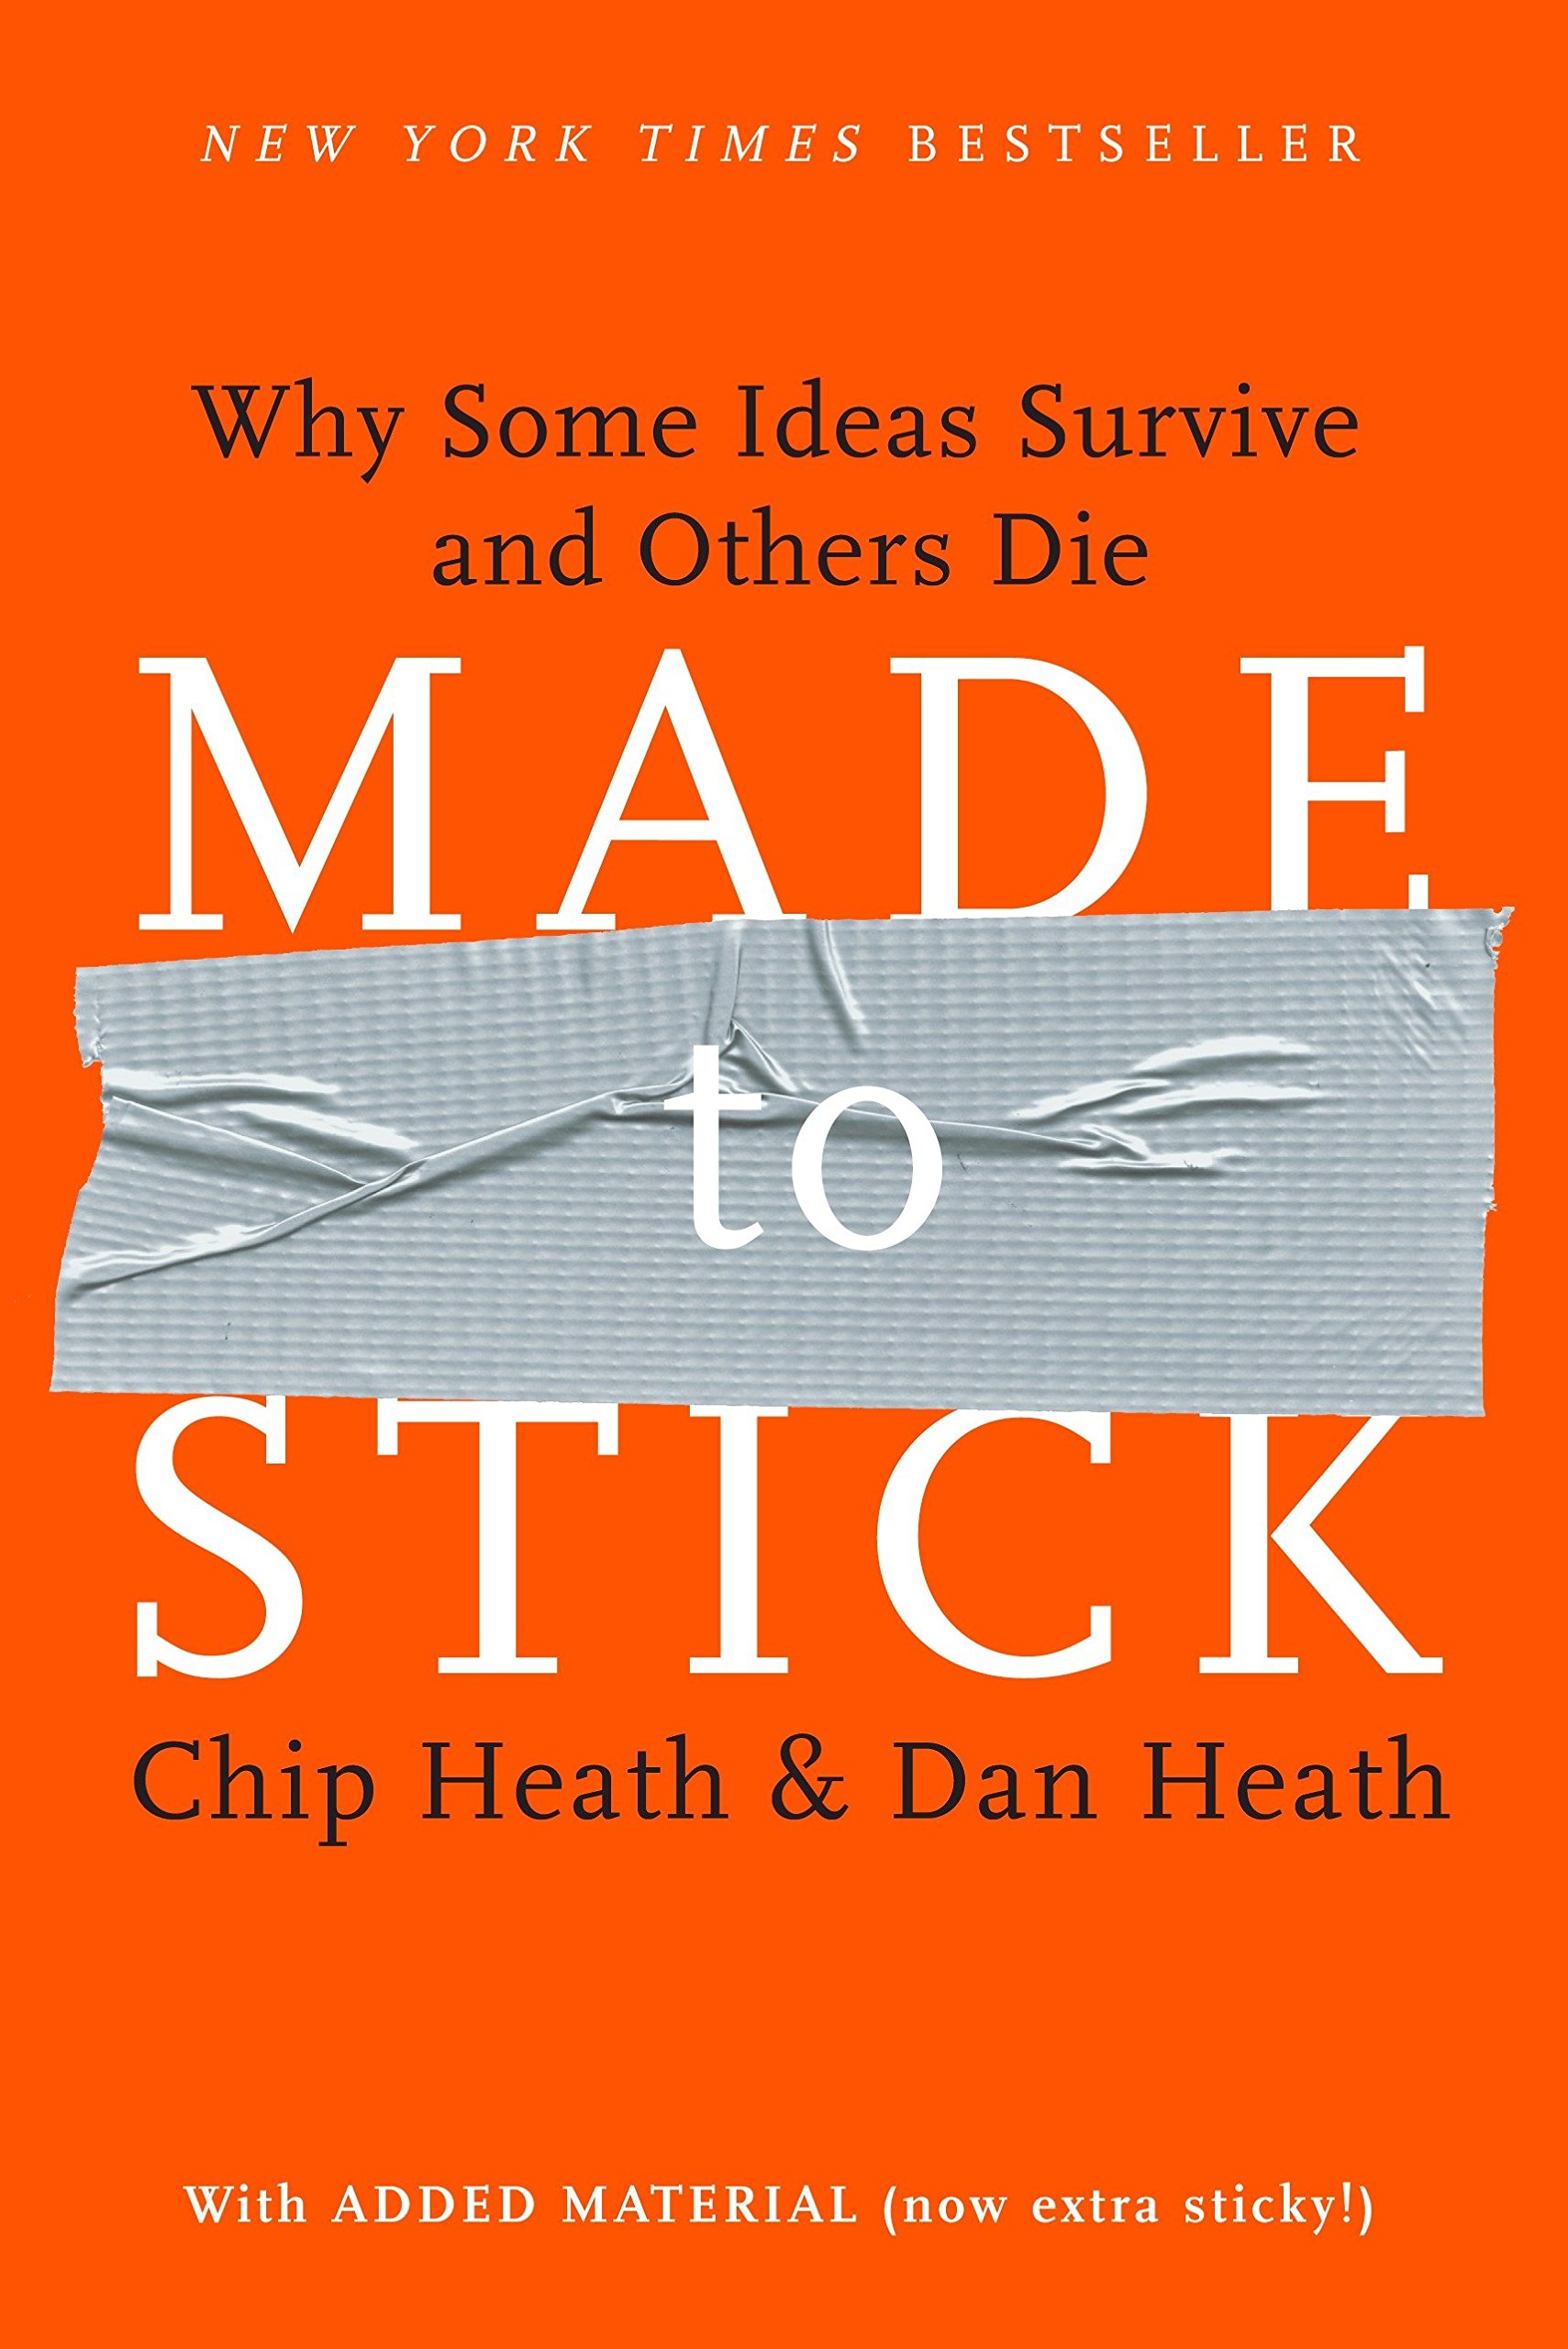 Made to stick by Chip & Dan Heath